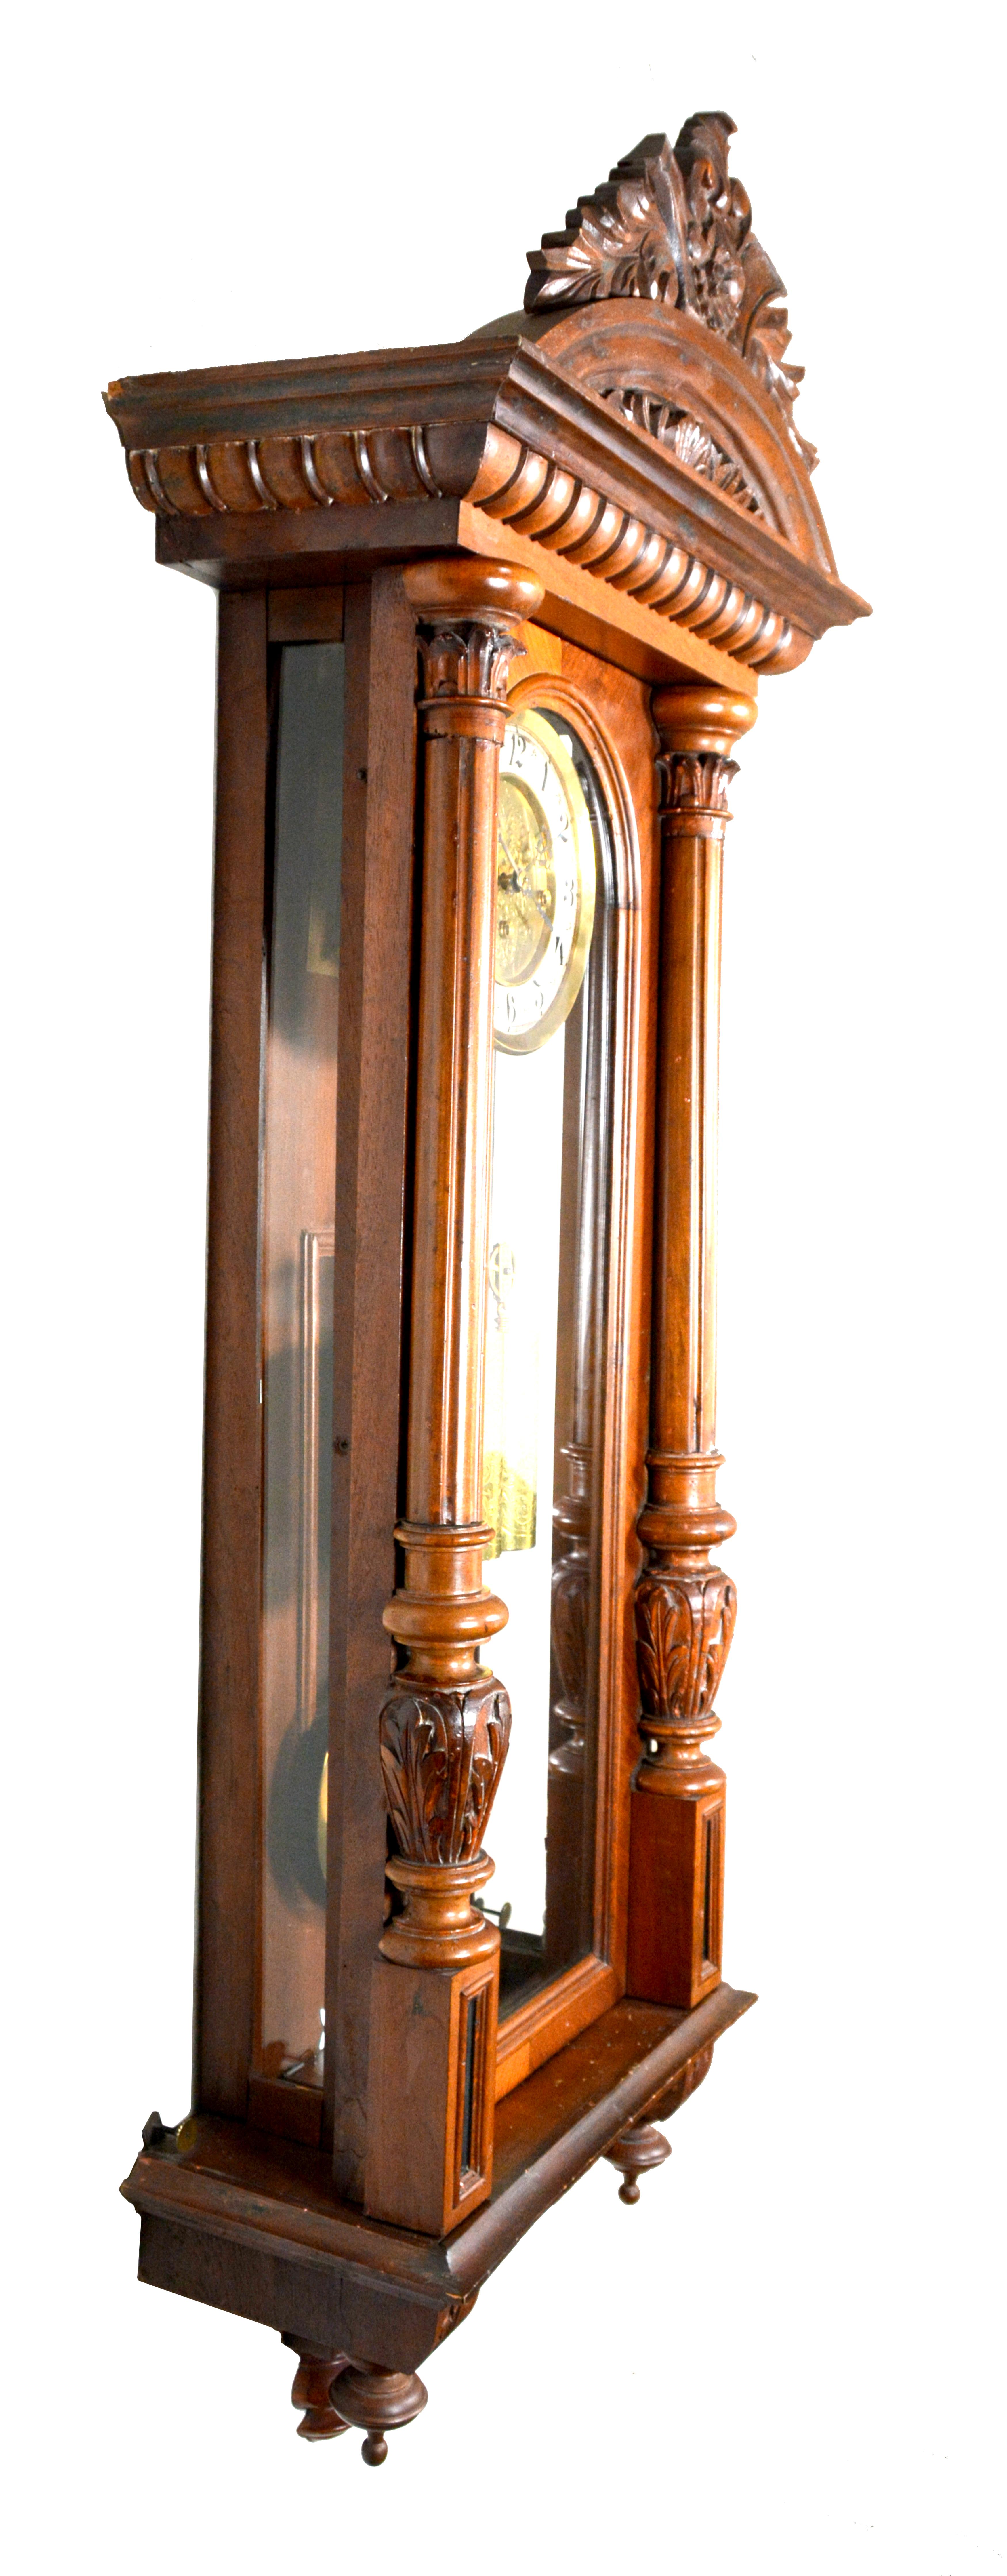 Antique 1890 German Kienzle Grand Sonnerie Vienna Regulator Wall Clock

Here is an excellent 3 weight driven regulator wall clock. This clock is 49-1/2